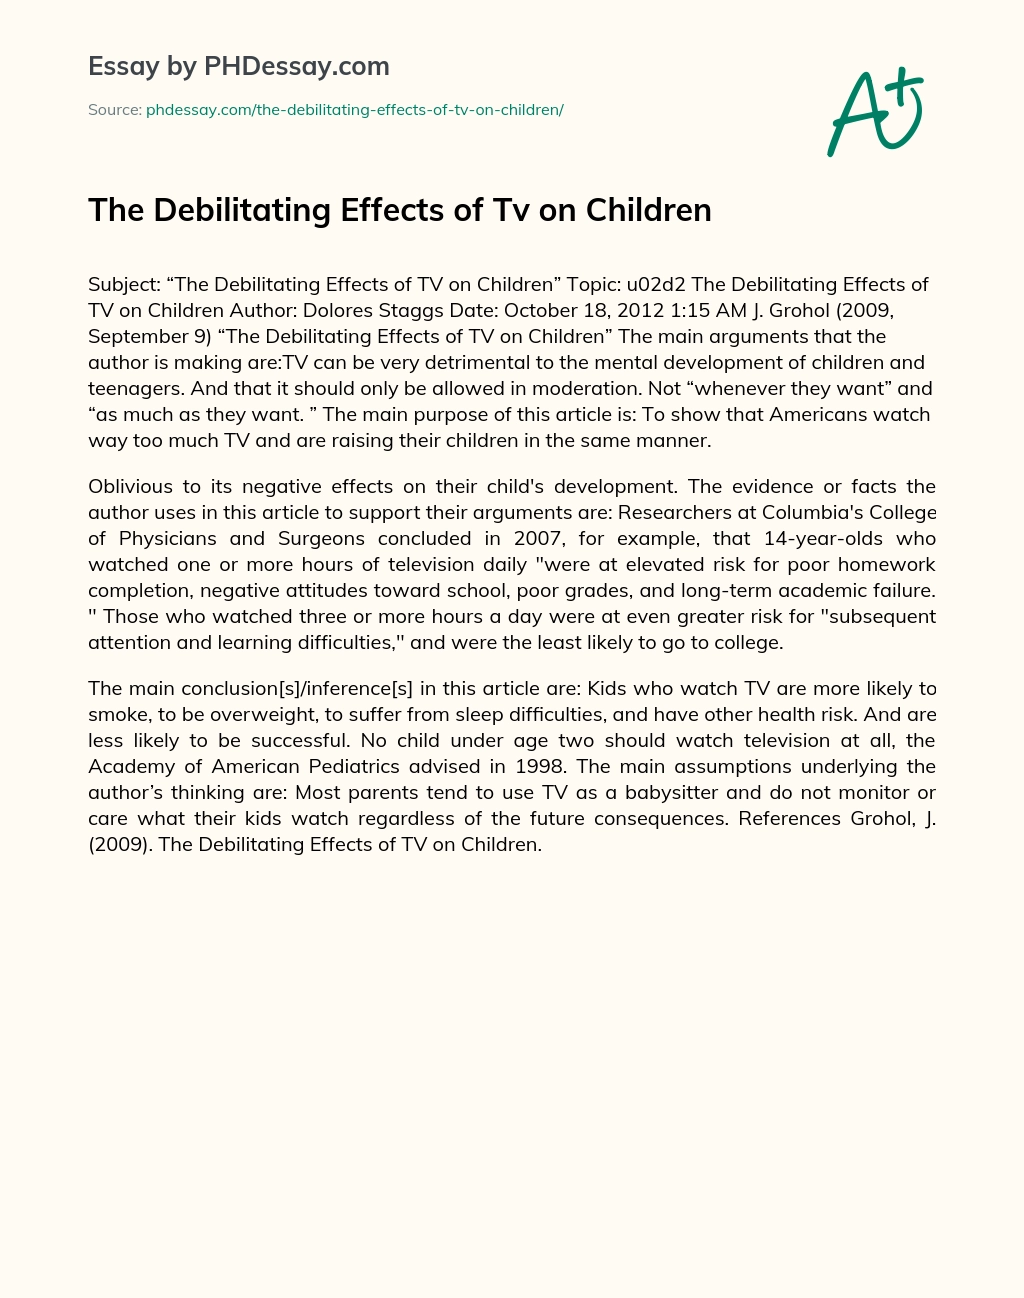 The Debilitating Effects of Tv on Children essay